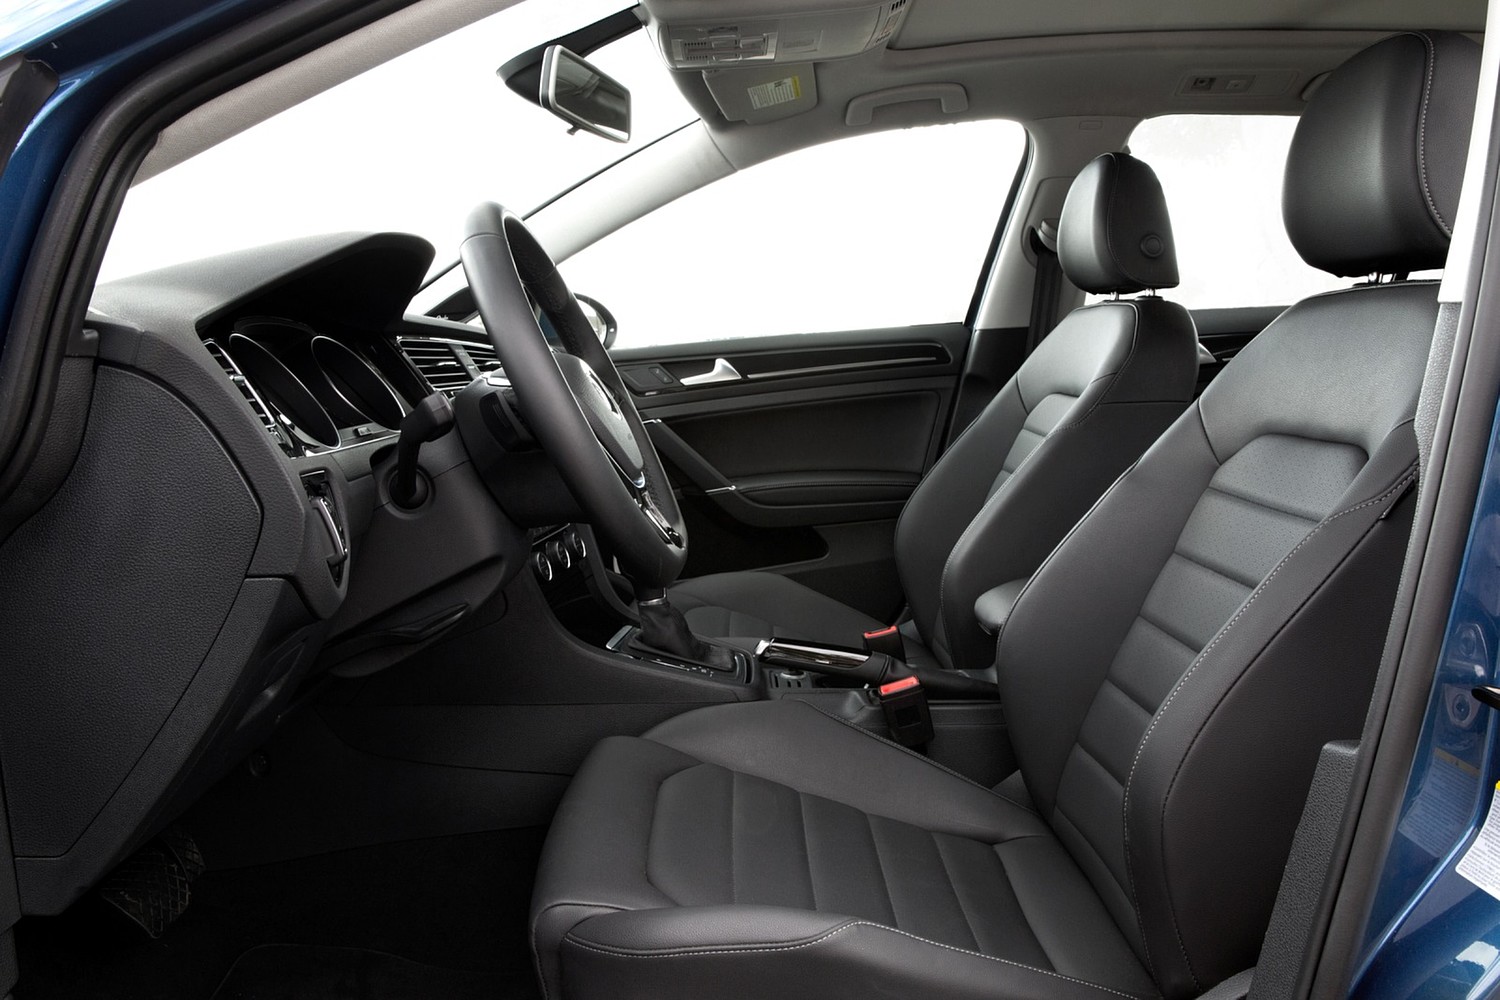 Volkswagen Golf SportWagen TSI SEL Wagon Interior (2015 model year shown)